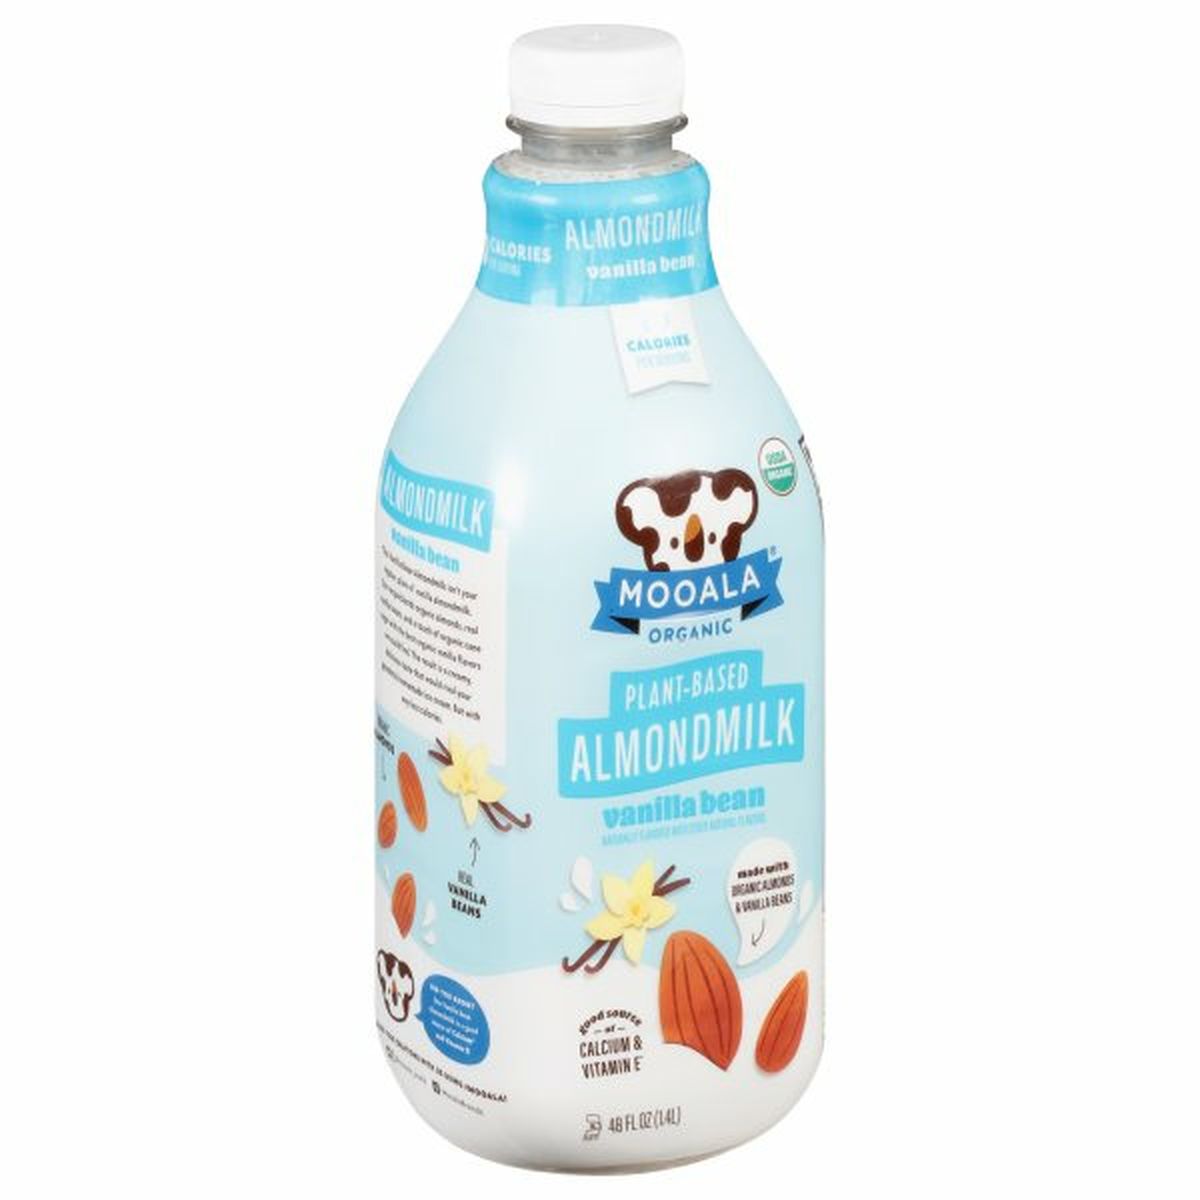 Calories in Mooala Almondmilk, Plant-Based, Vanilla Bean